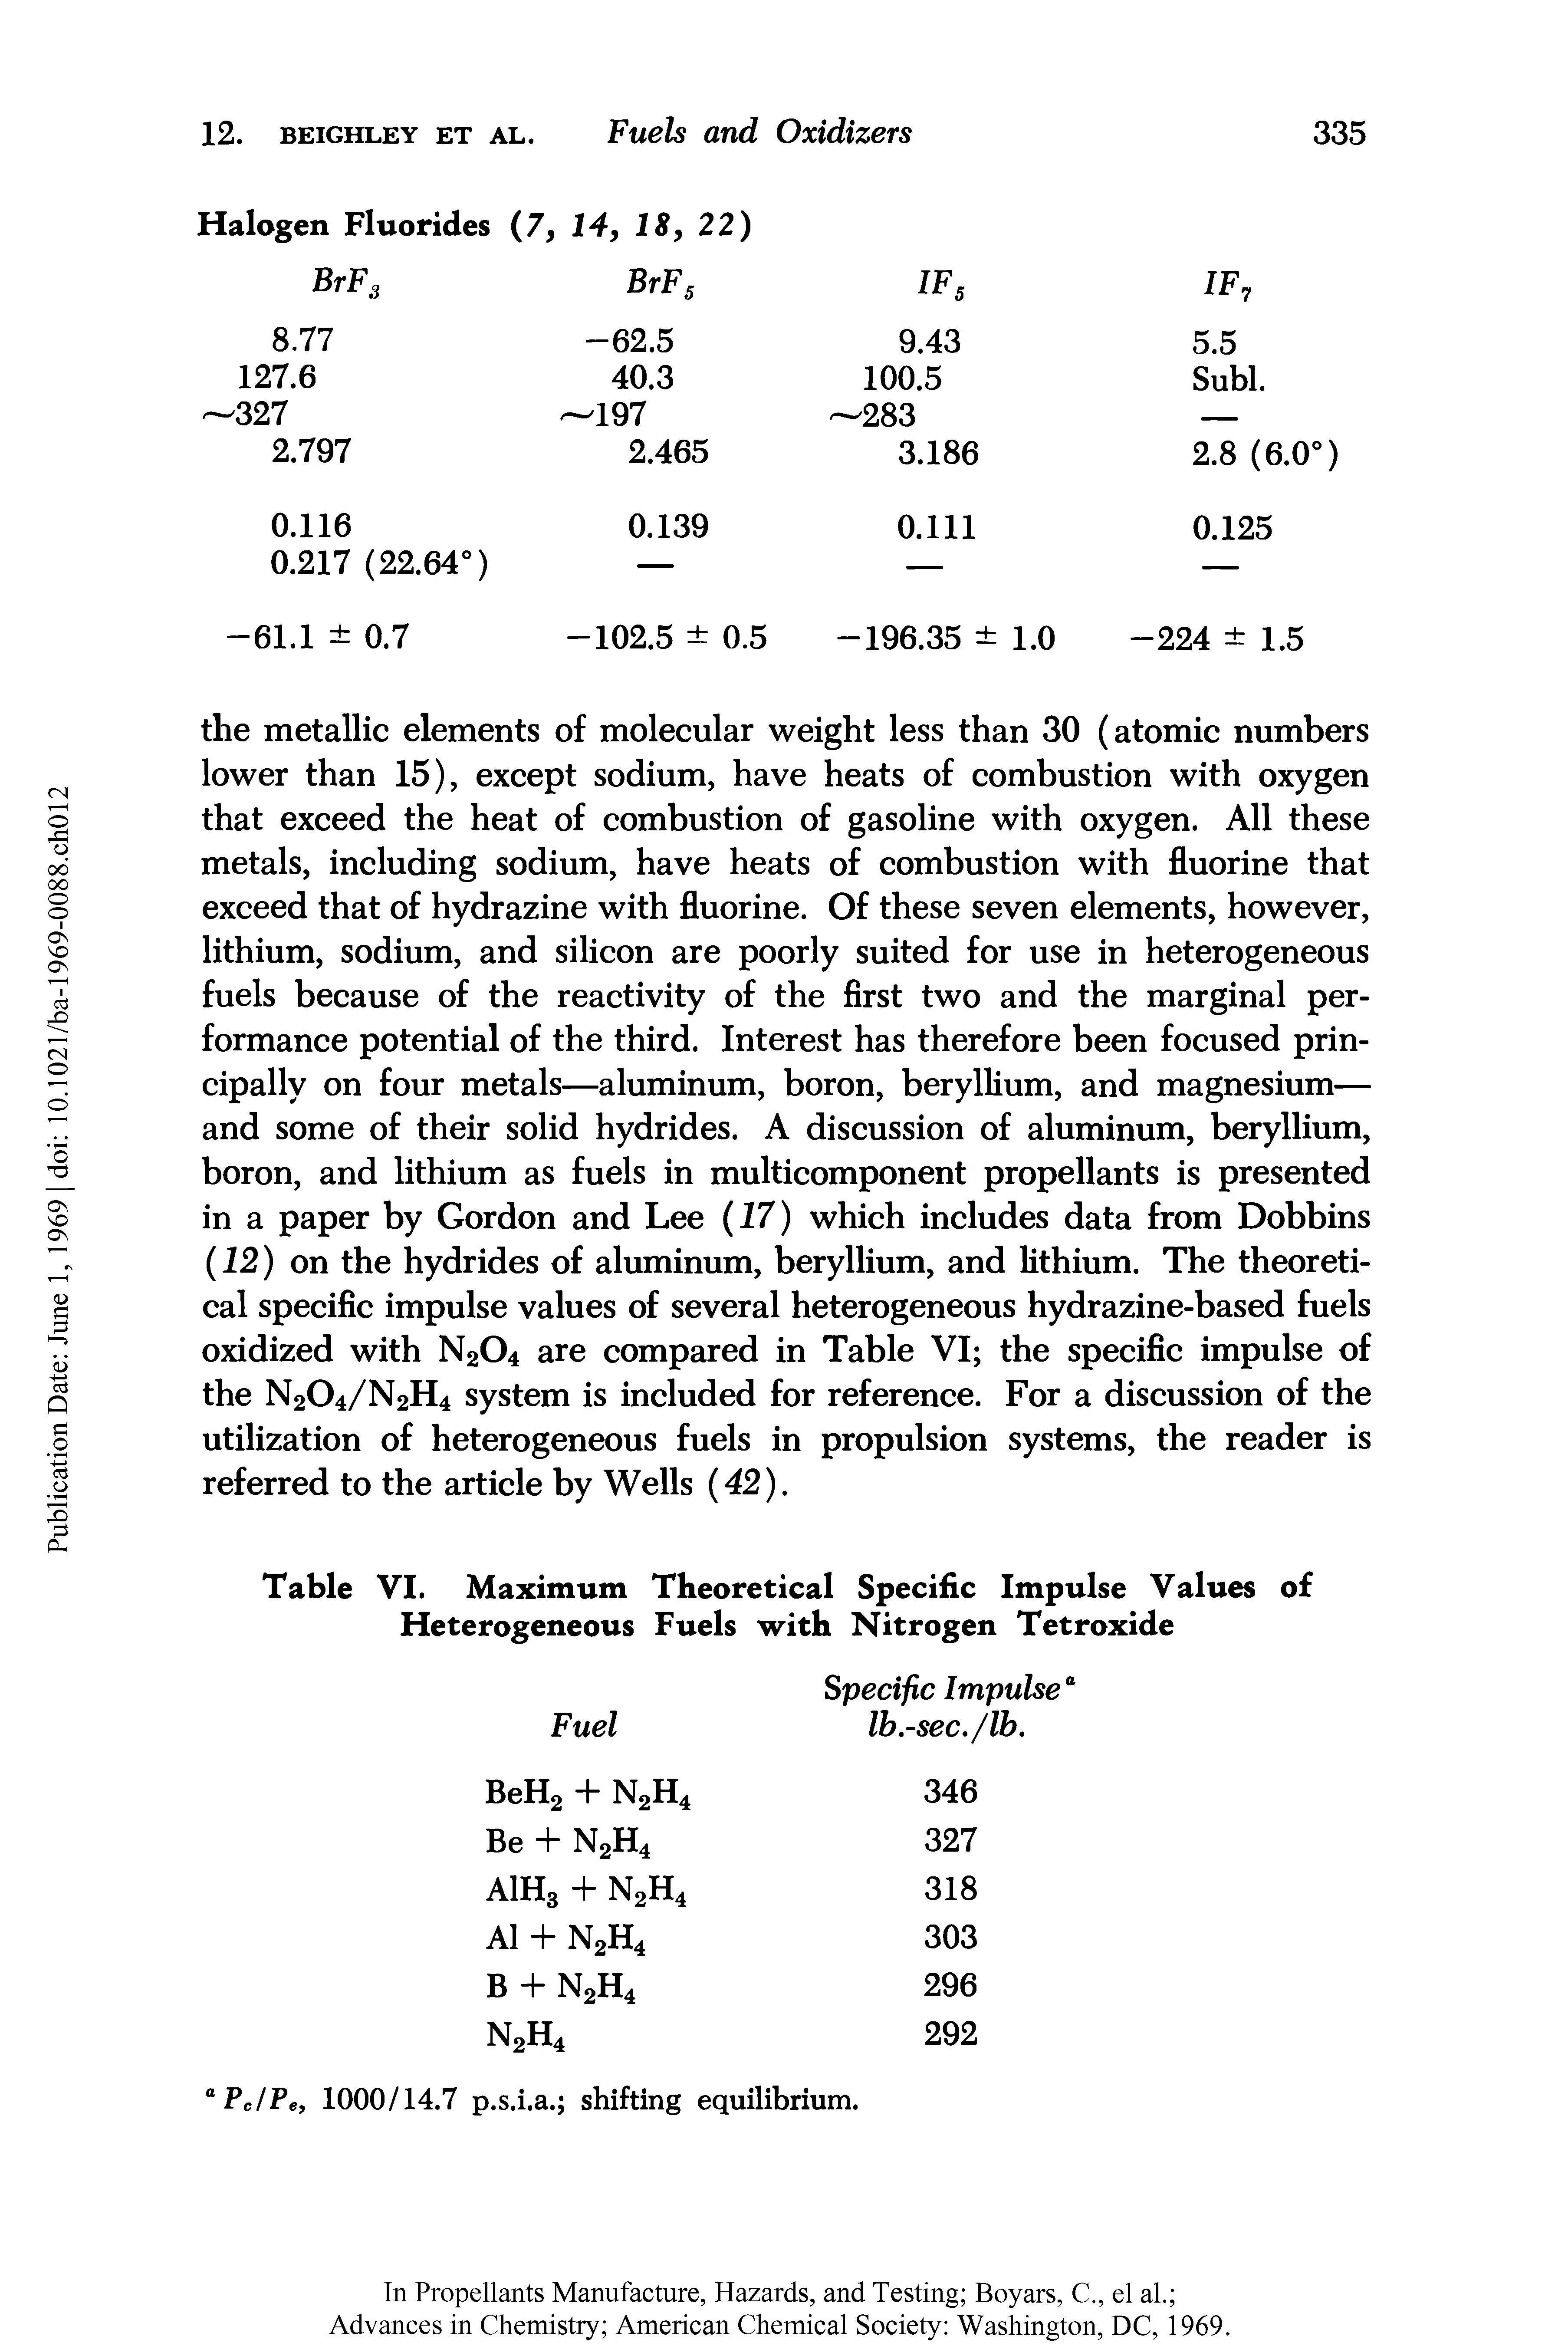 Table VI. Maximum Theoretical Specific Impulse Values of Heterogeneous Fuels with Nitrogen Tetroxide...